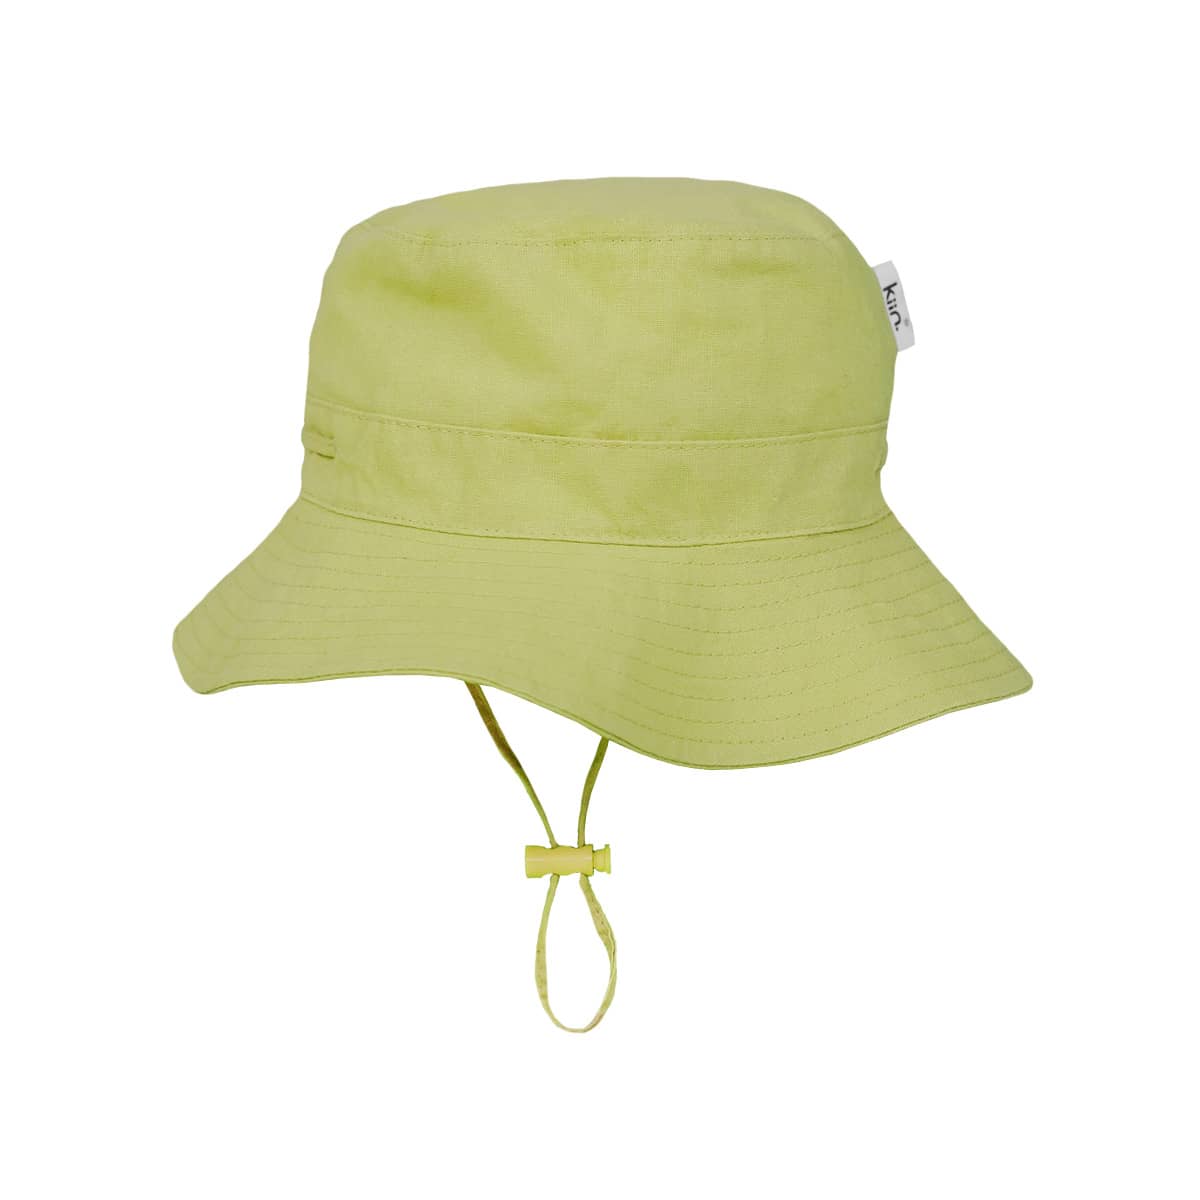 Kiin Baby Cotton Sun Hat - Avocado